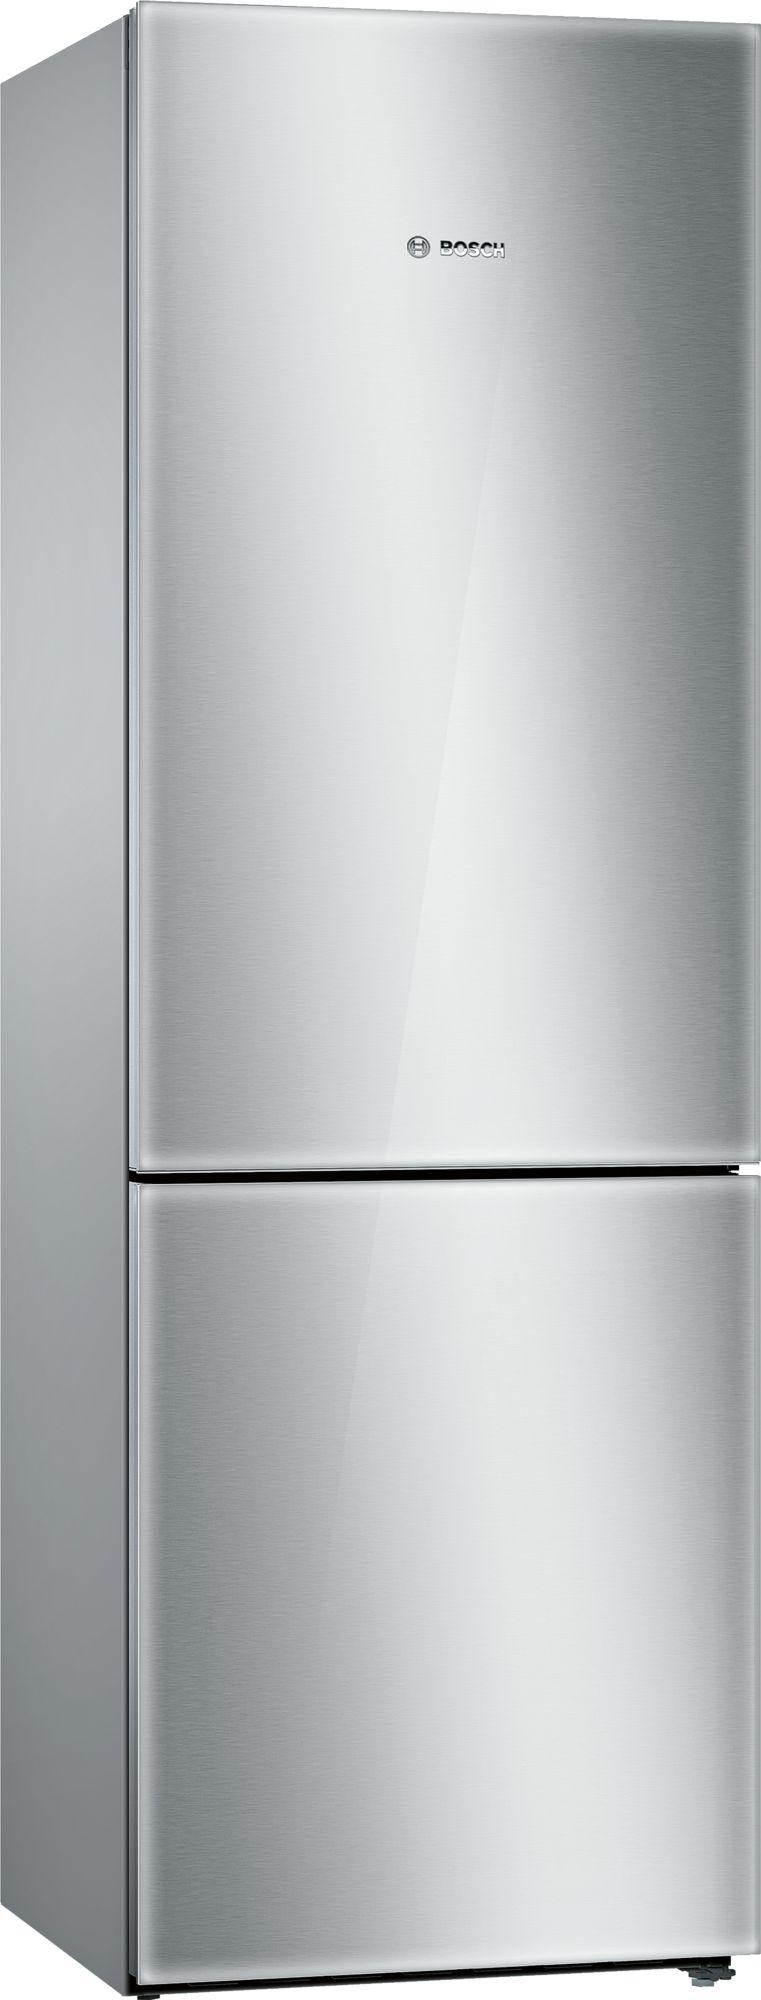 Bosch - 23.5 Inch 10 cu. ft Bottom Mount Refrigerator in Stainless - B10CB80NVS